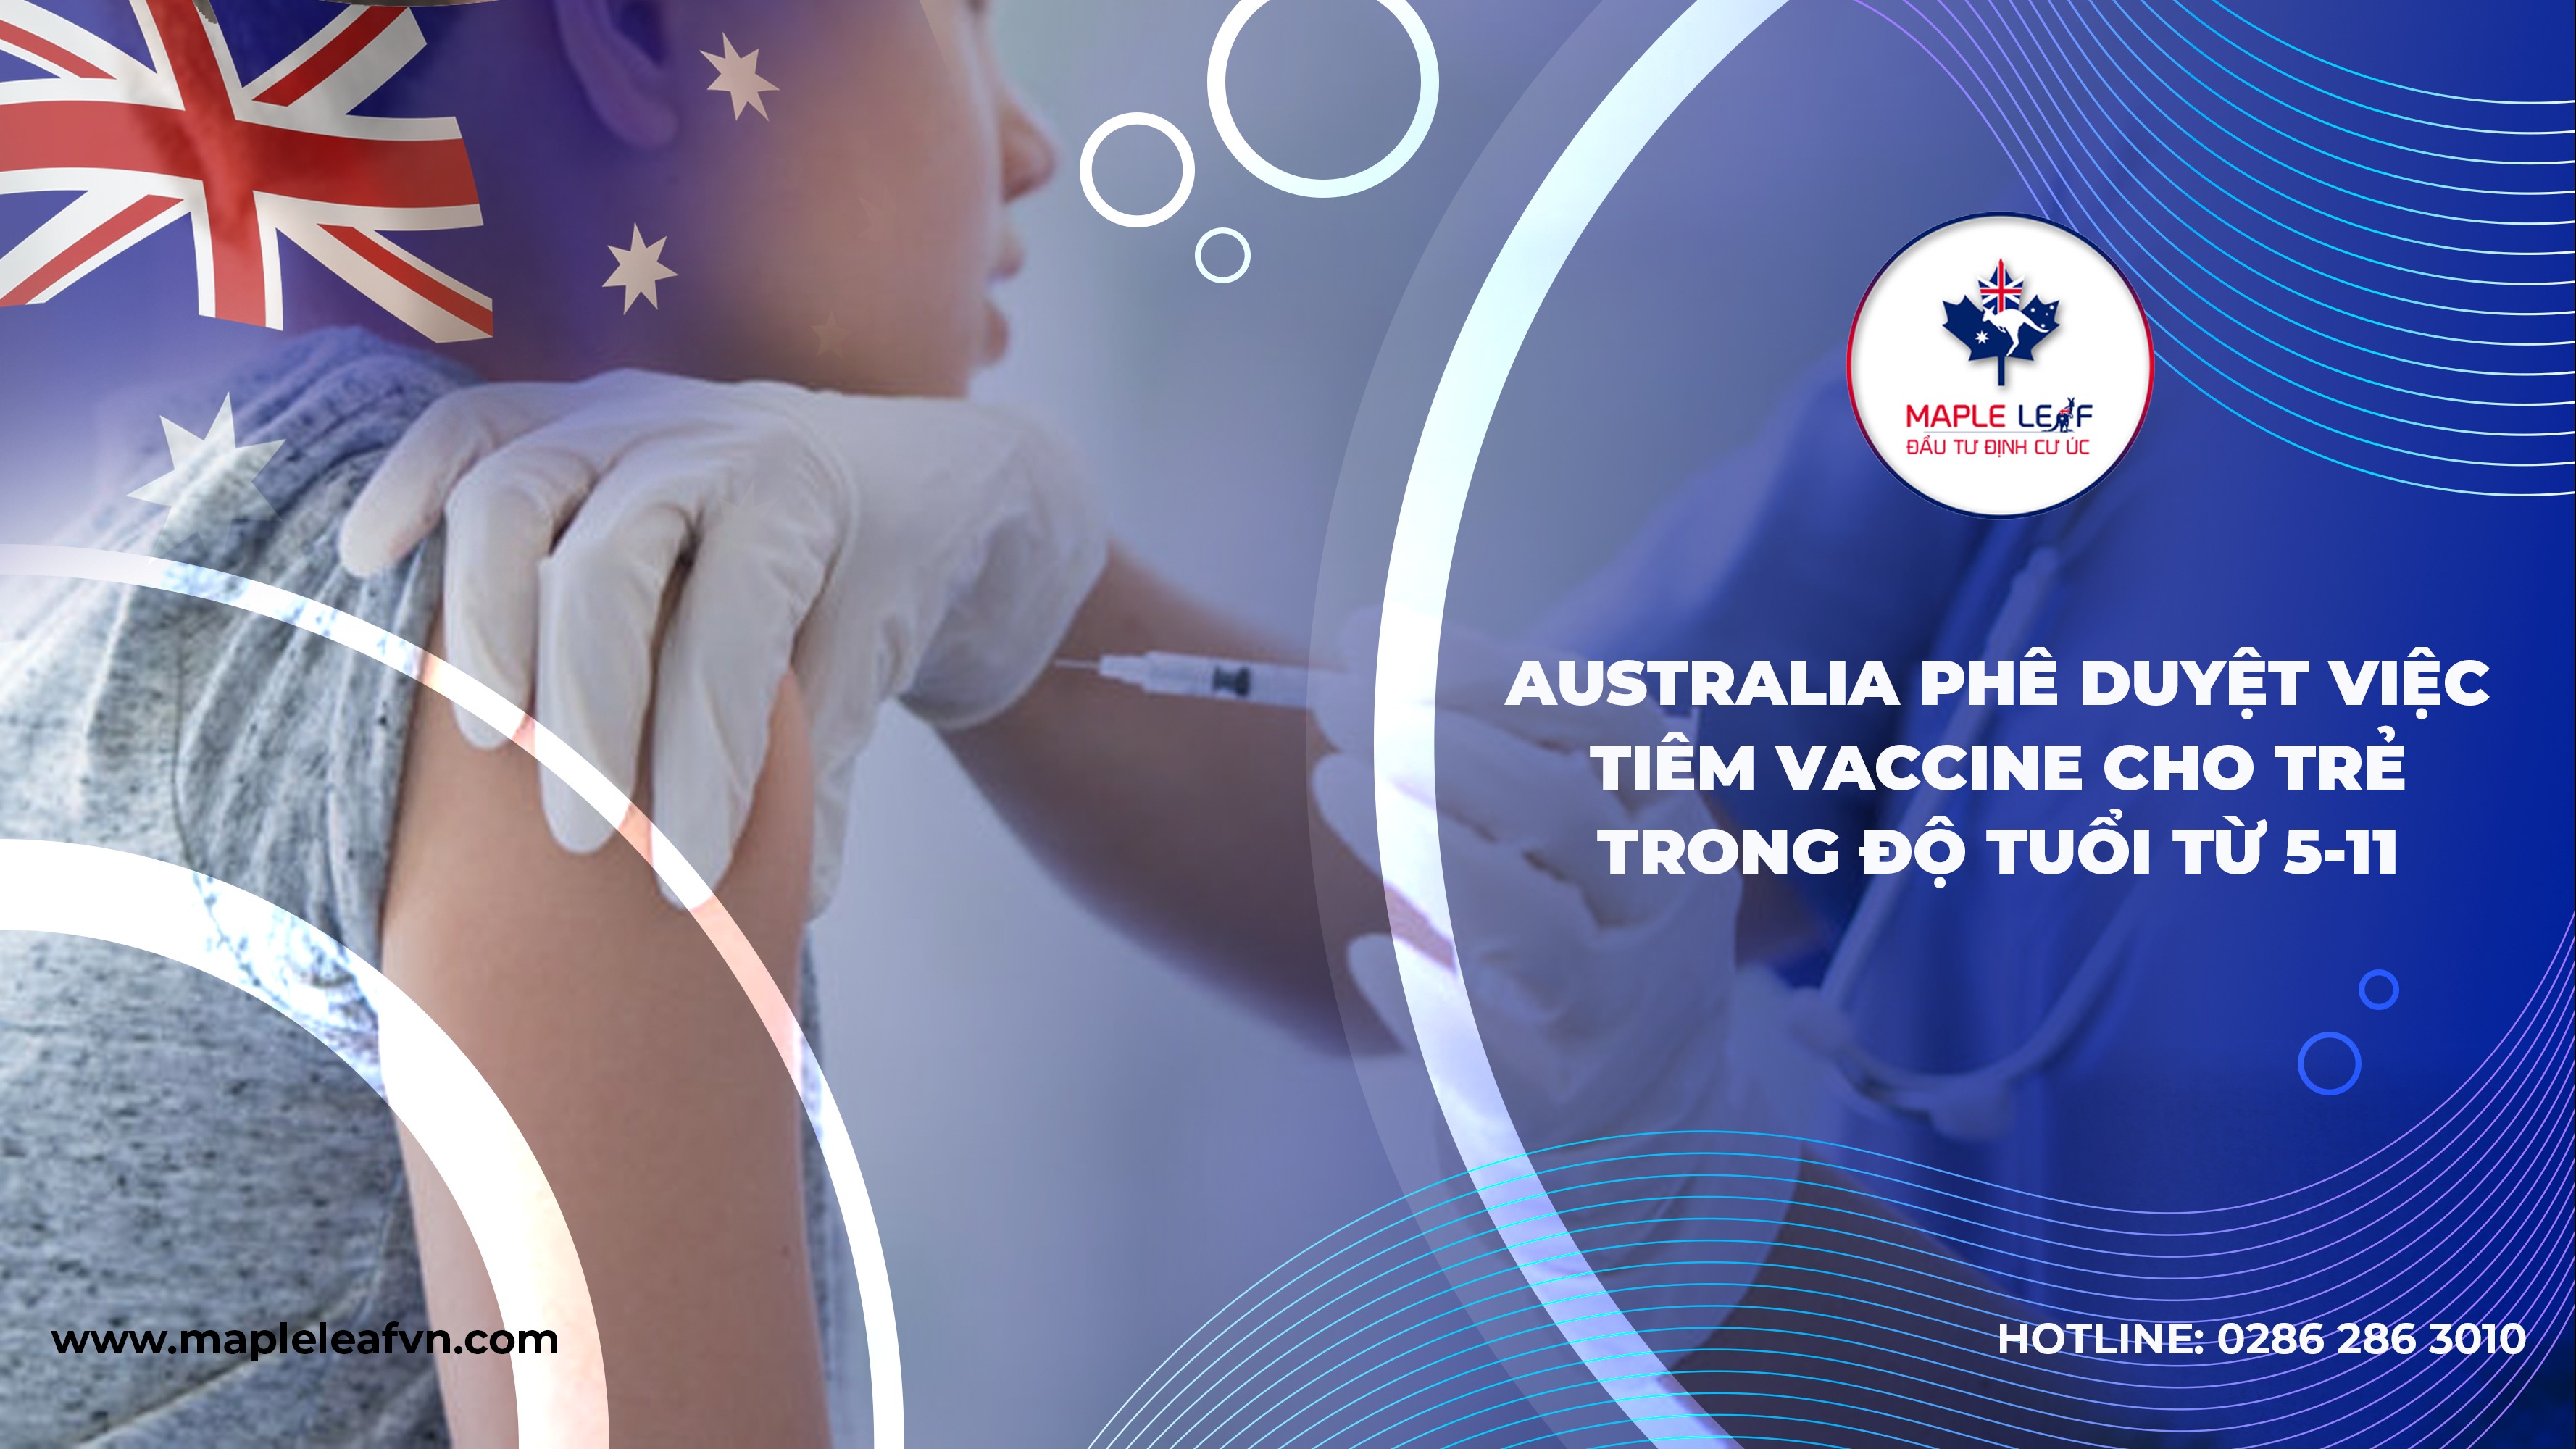 australia-phe-duyet-viec-tiem-vaccine-cho-tre-trong-do-tuoi-tu-5-11